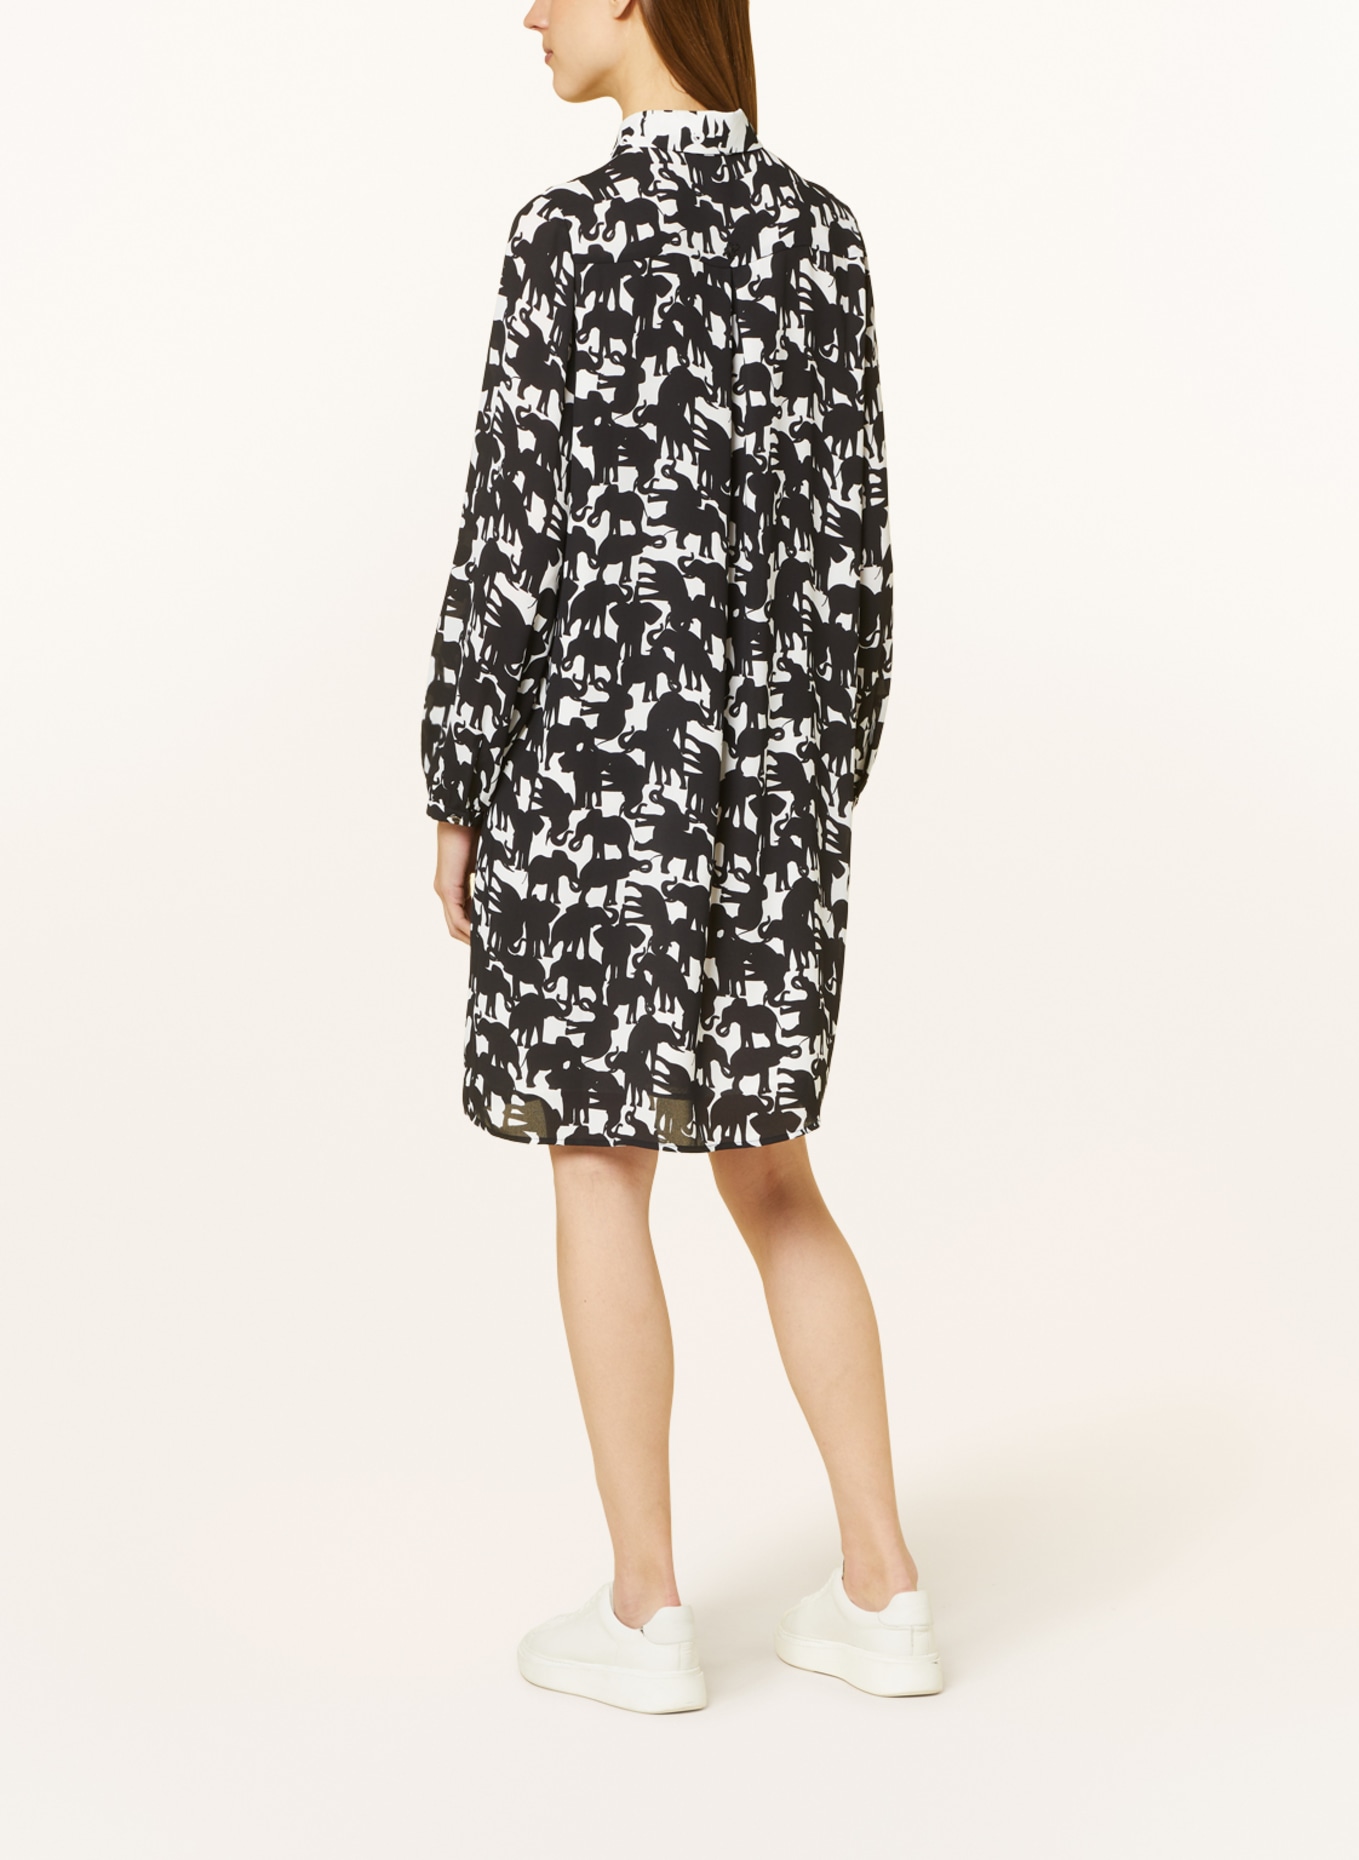 MARC CAIN Kleid, Farbe: 910 black and white (Bild 3)